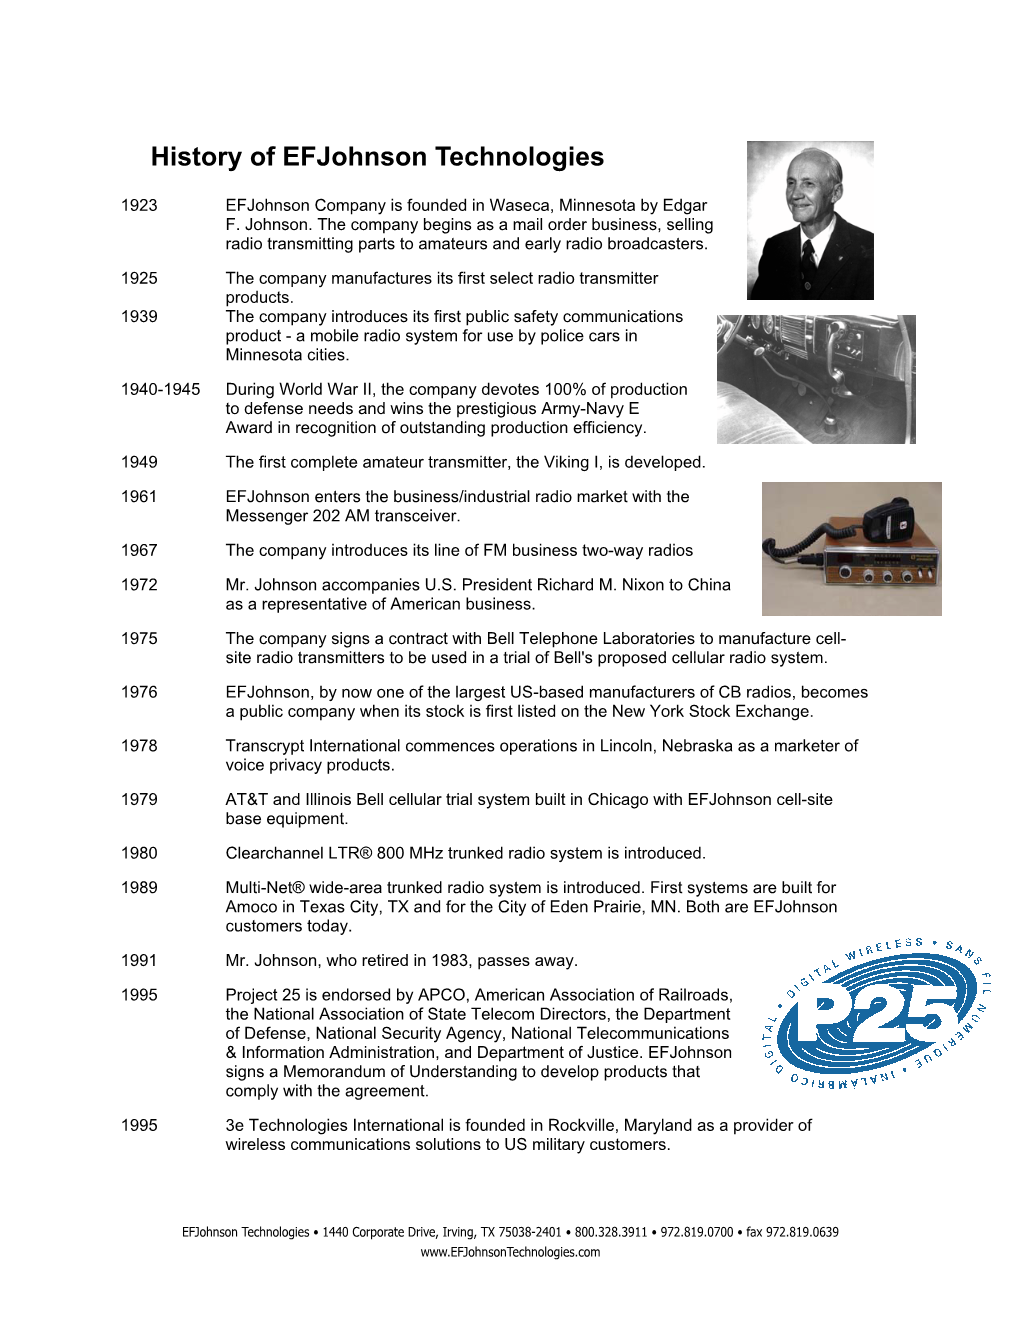 History of Efjohnson Technologies